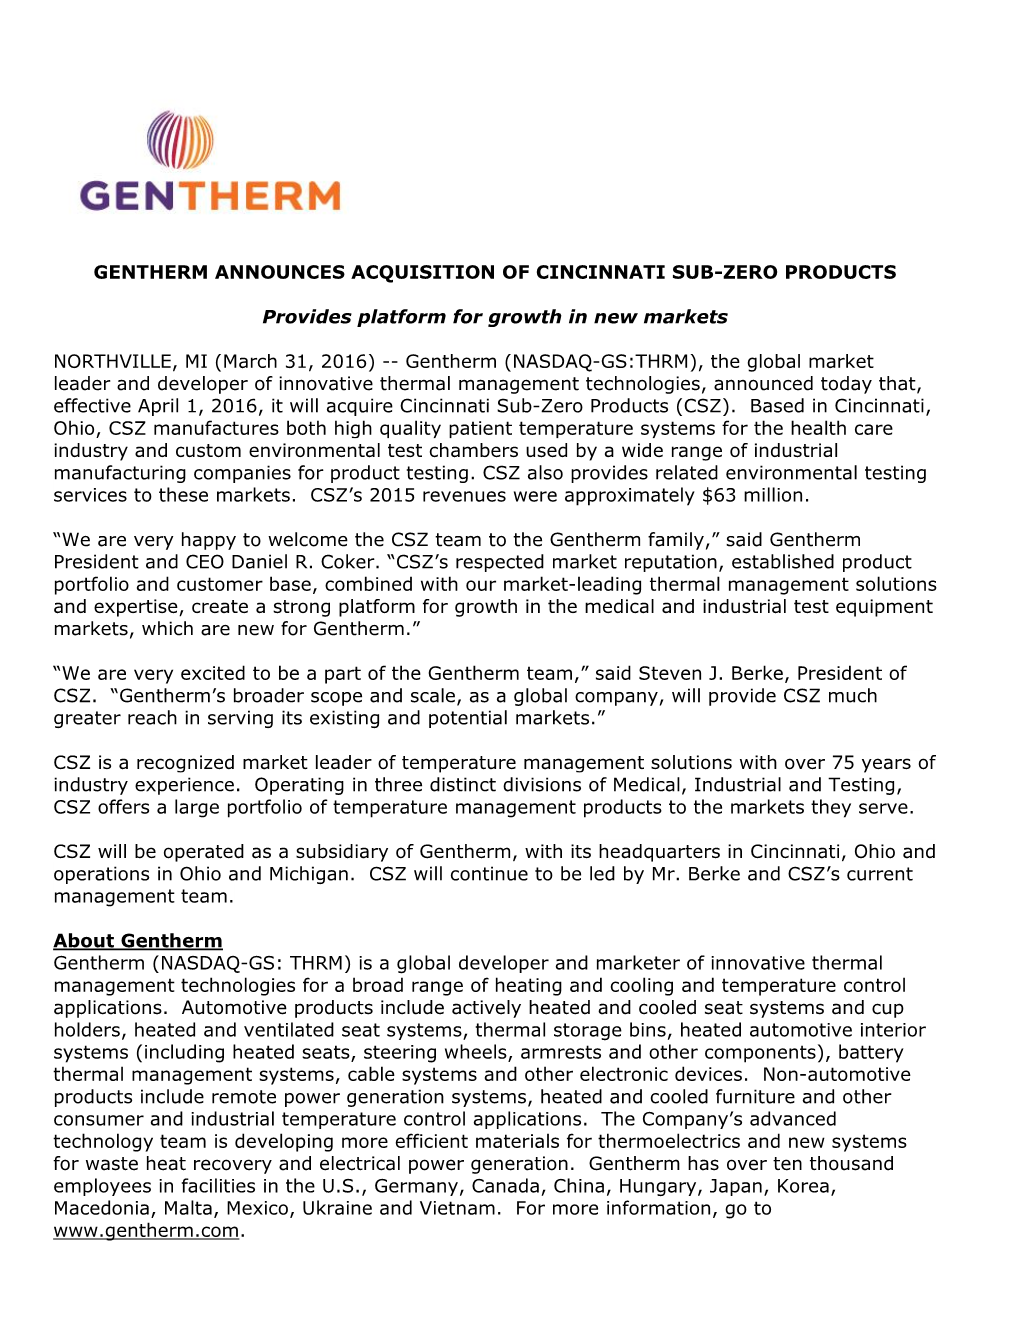 Gentherm Announces Acquisition of Cincinnati Sub-Zero Products